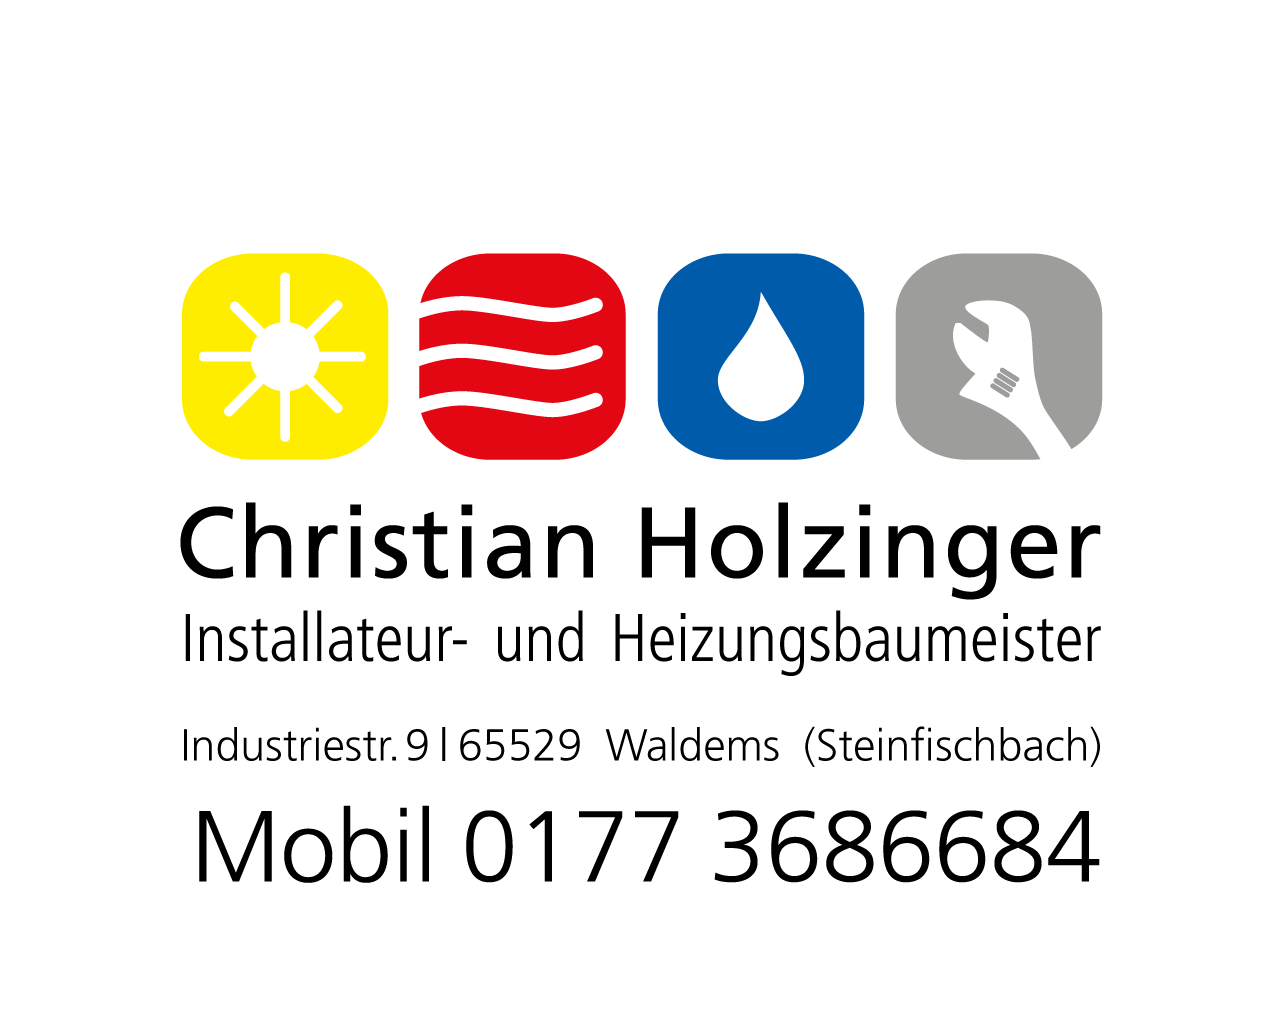 Christian Holzinger